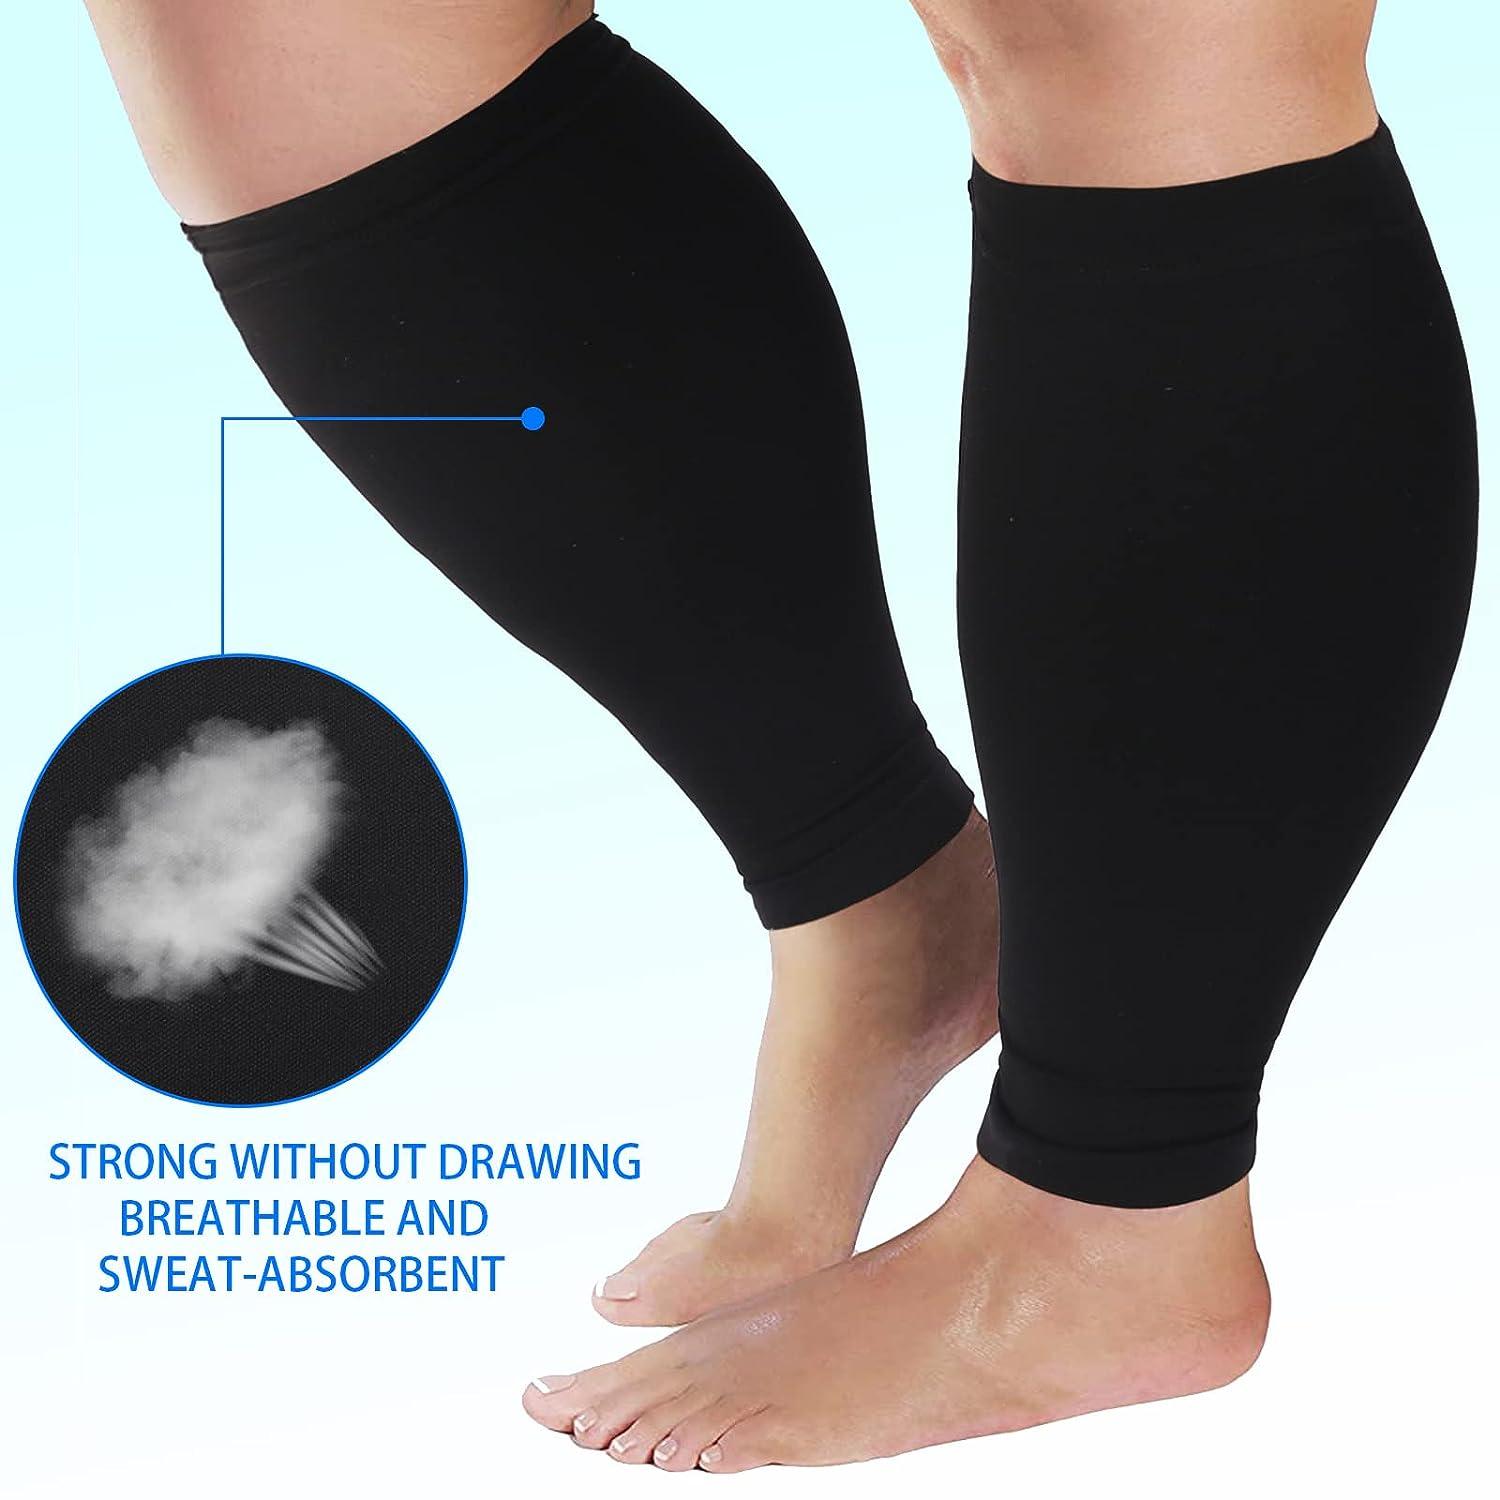 XXXL Wide Plus Size Calf Compression Socks for Swelling, Pain, Edema, DVT  Unisex